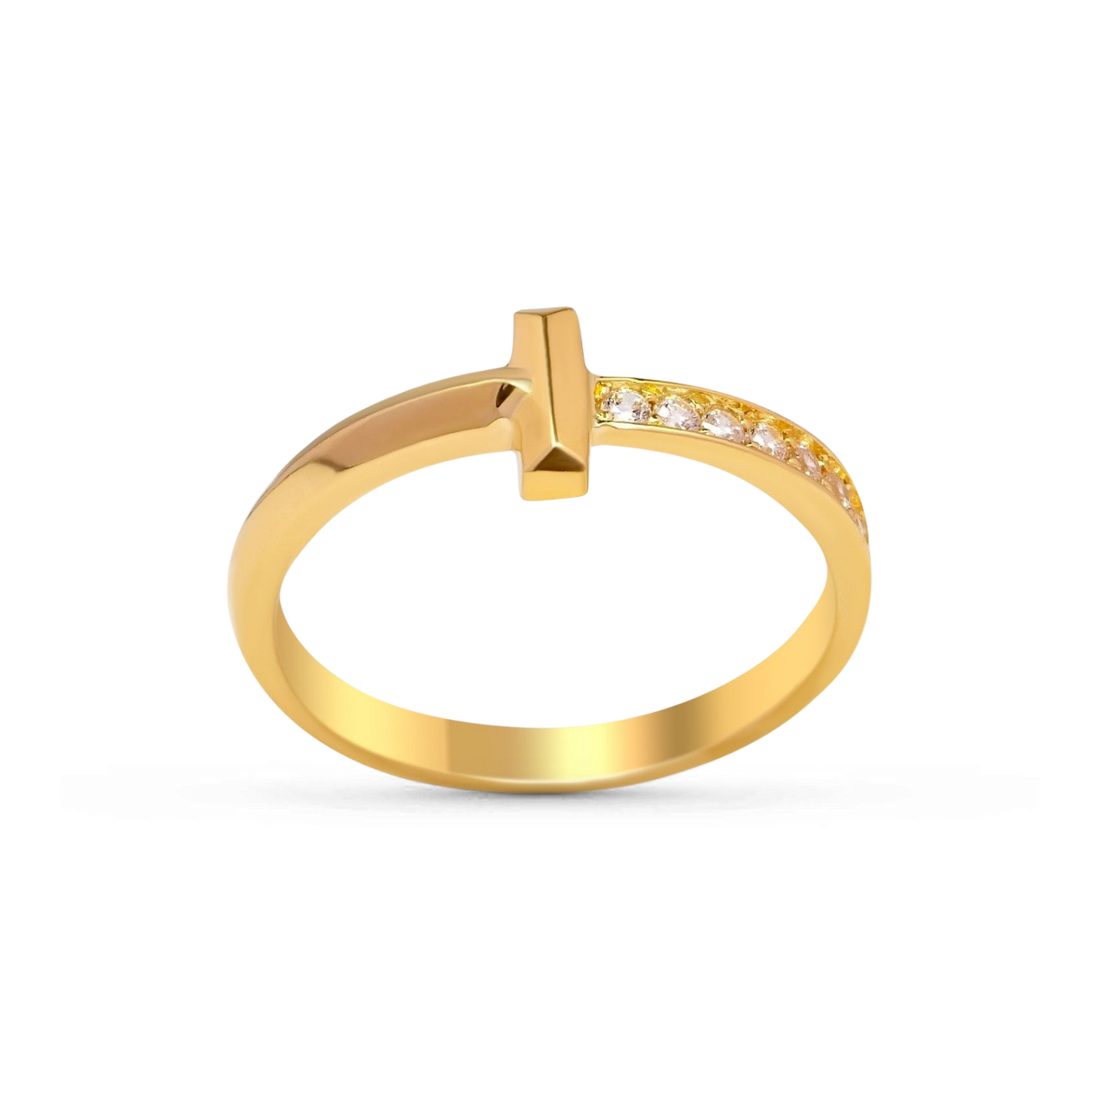 Small Bar Ring | 10k Yellow/White/Rose Gold